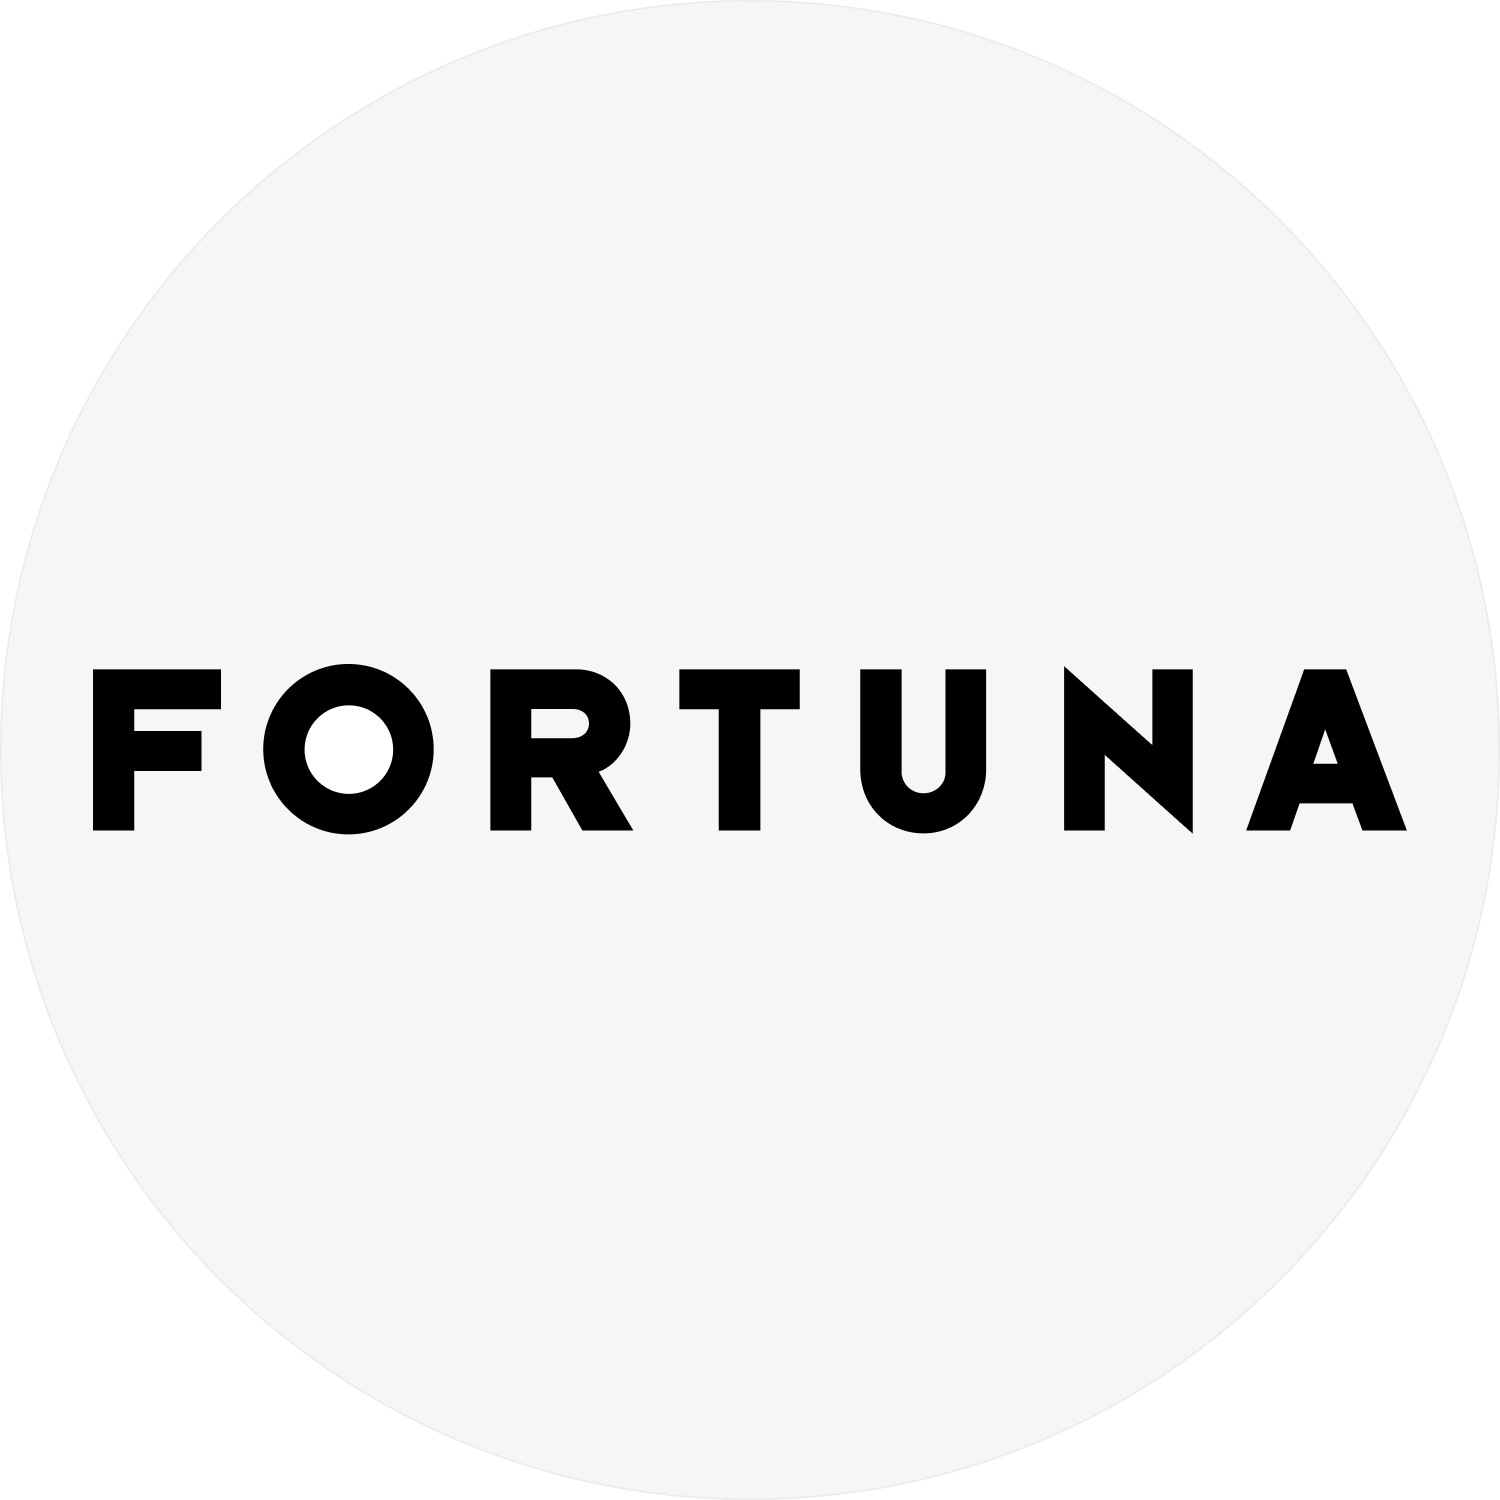 Fortuna logo rotund 1500x1500